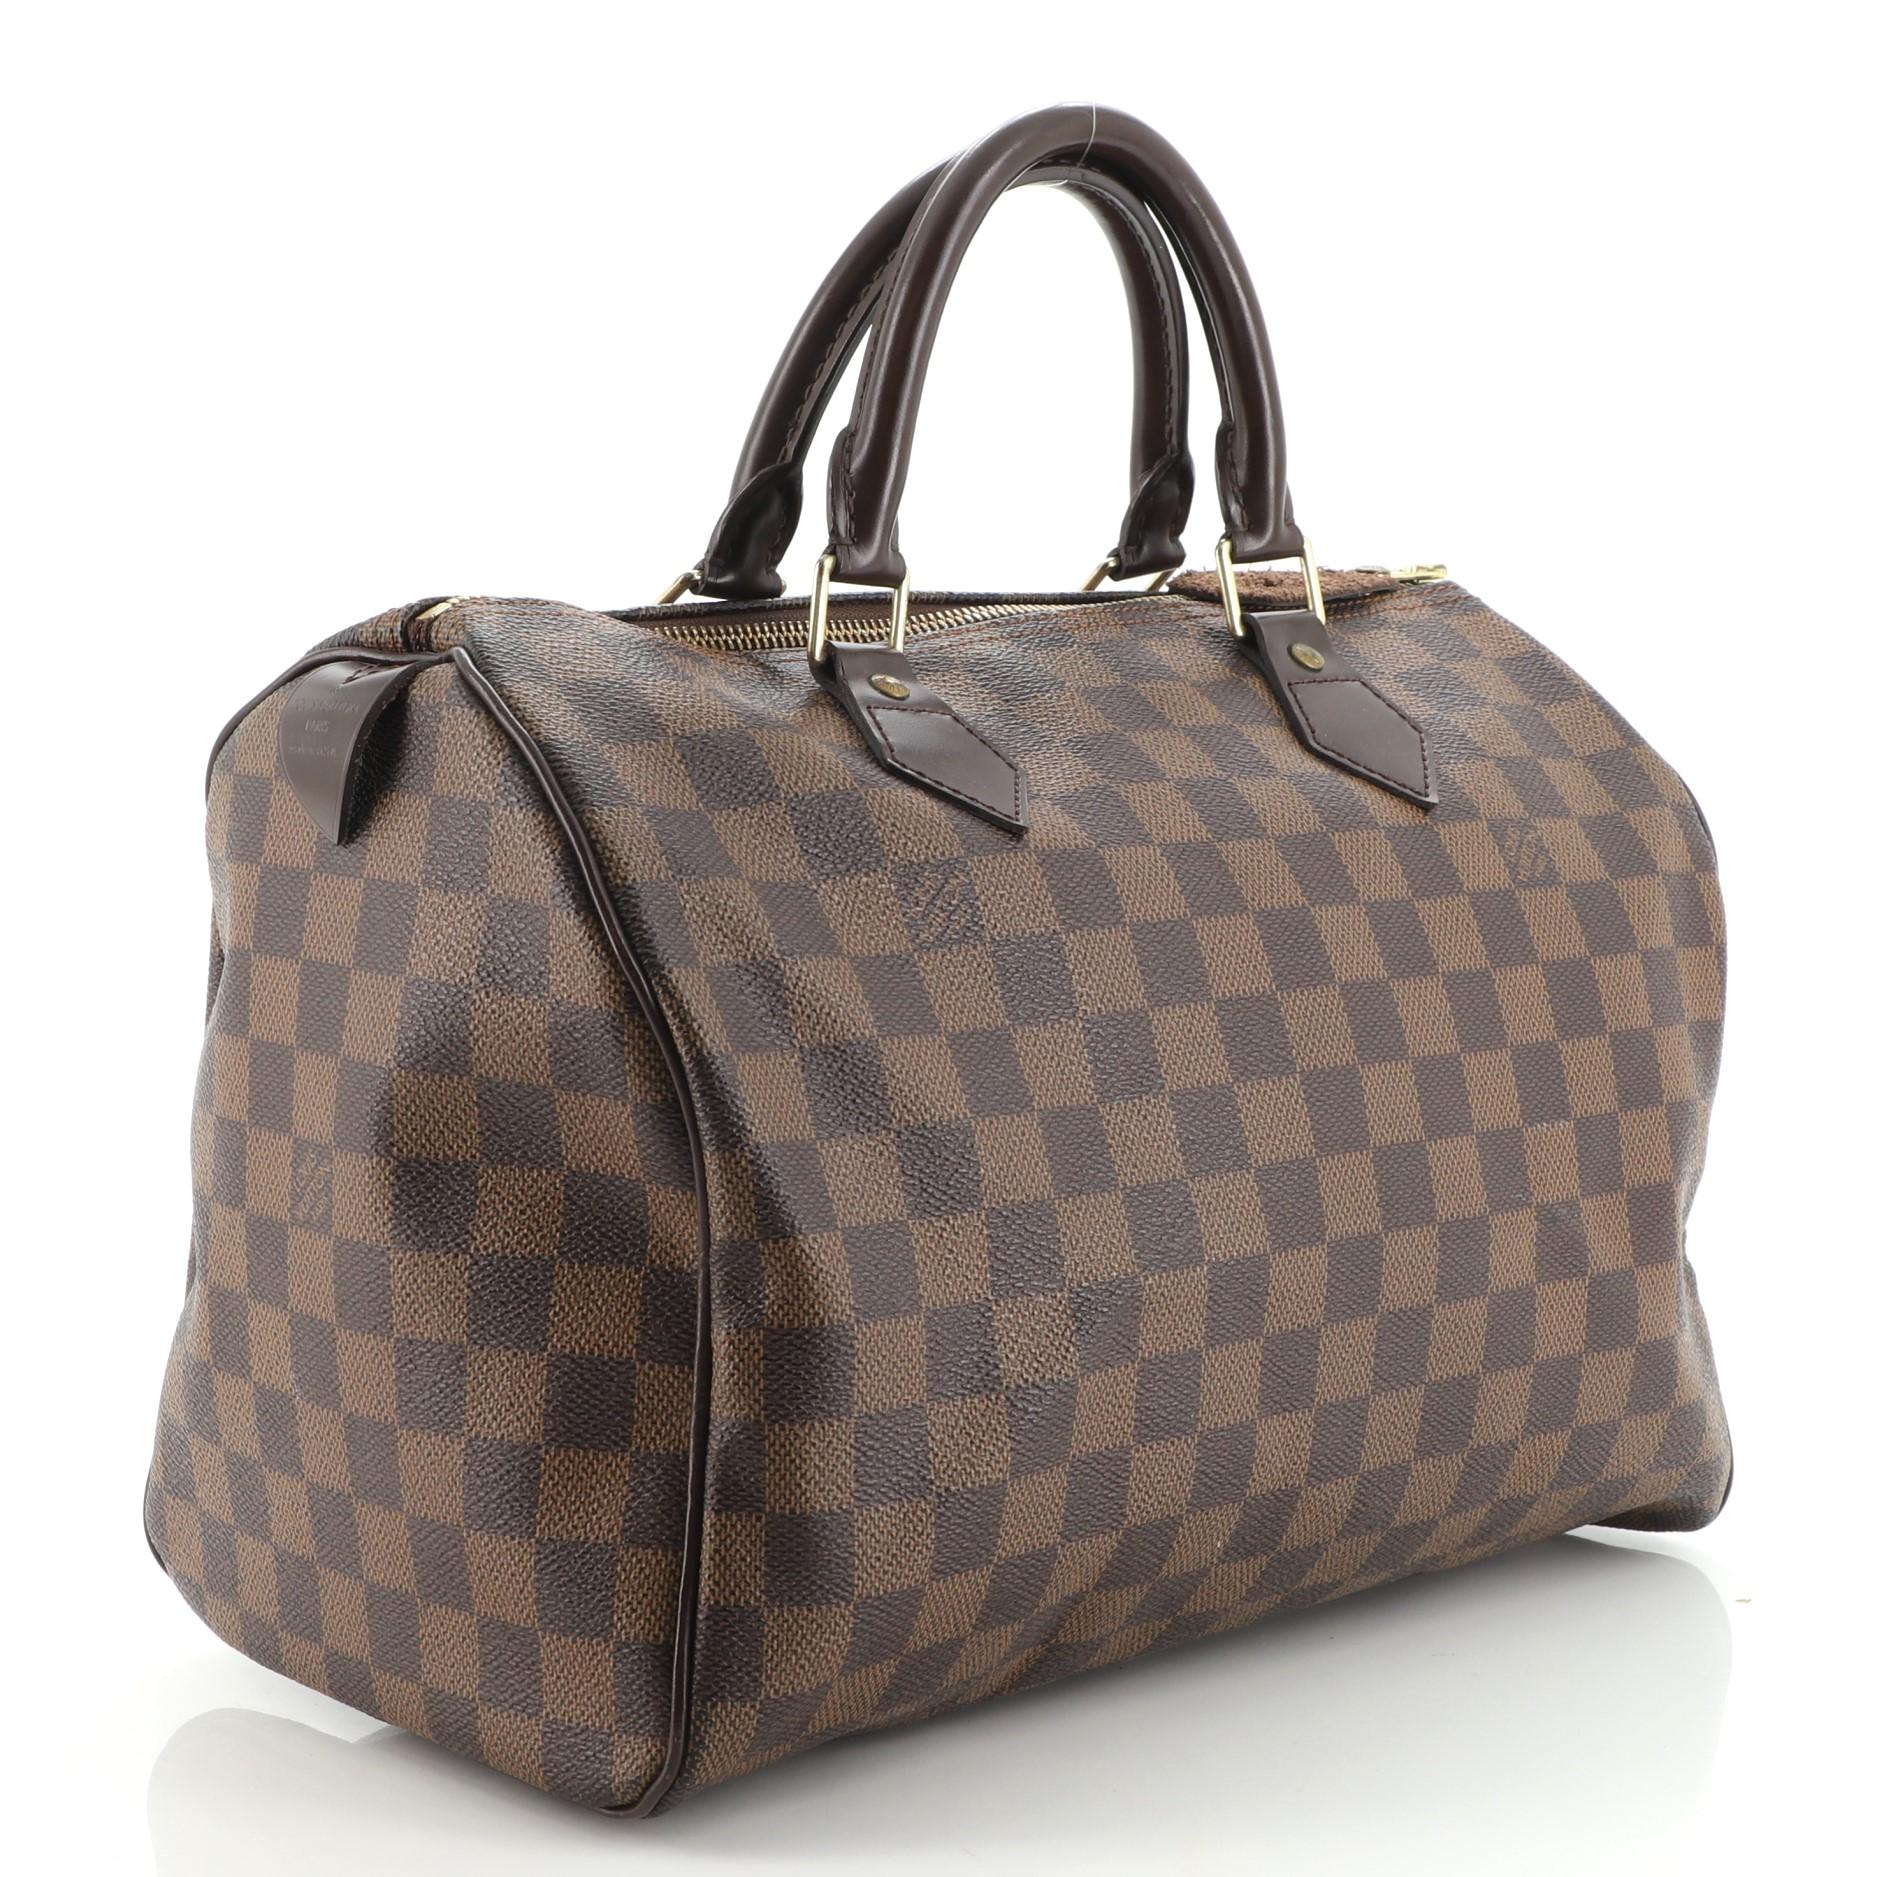 Black Louis Vuitton Speedy Handbag Damier 35